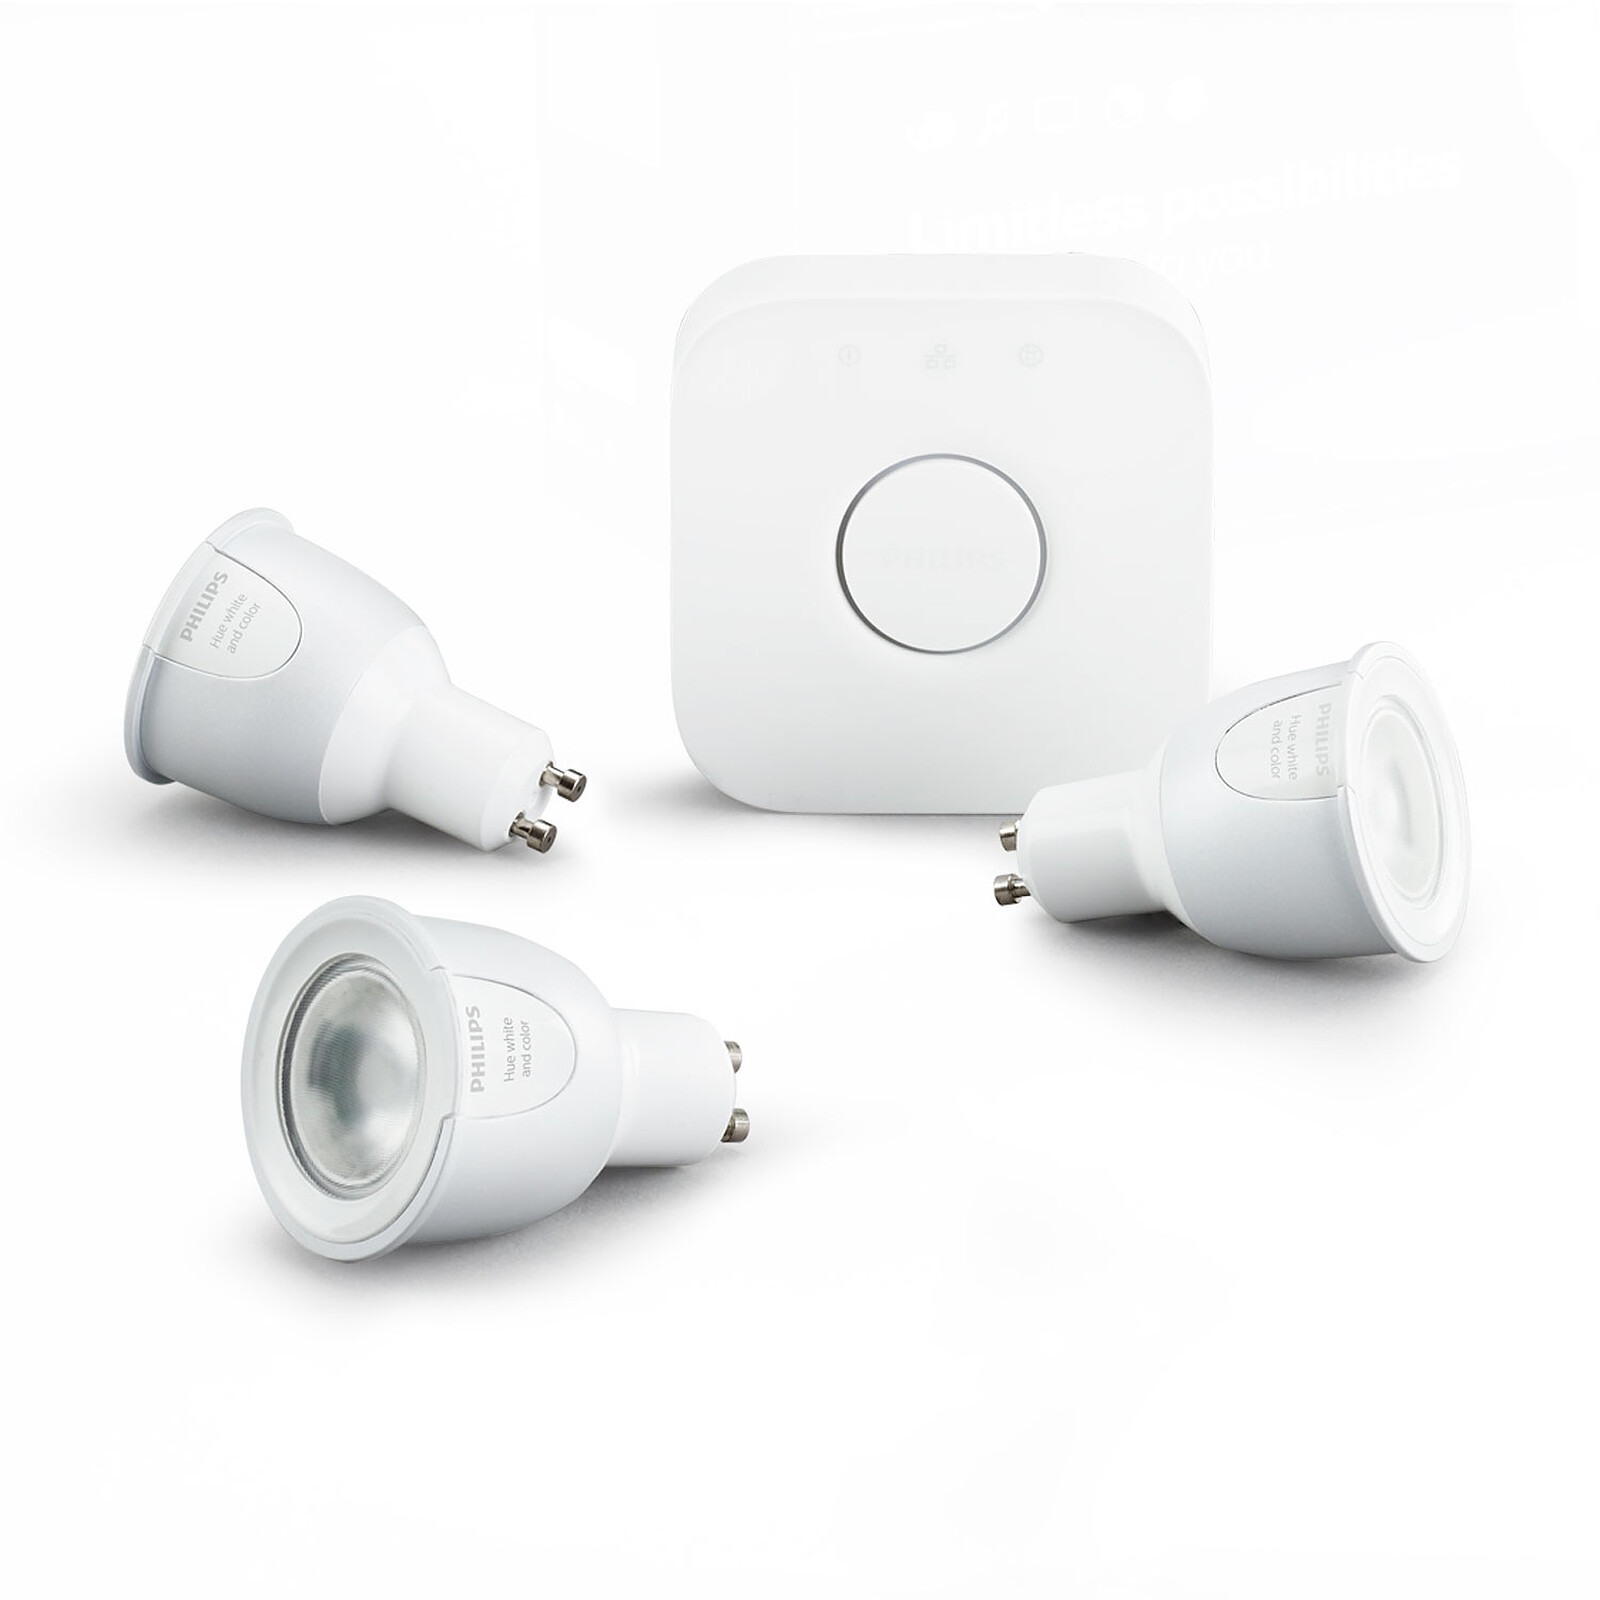 Philips Hue White & Color GU10 6.5 W Bluetooth x 1 - Ampoule